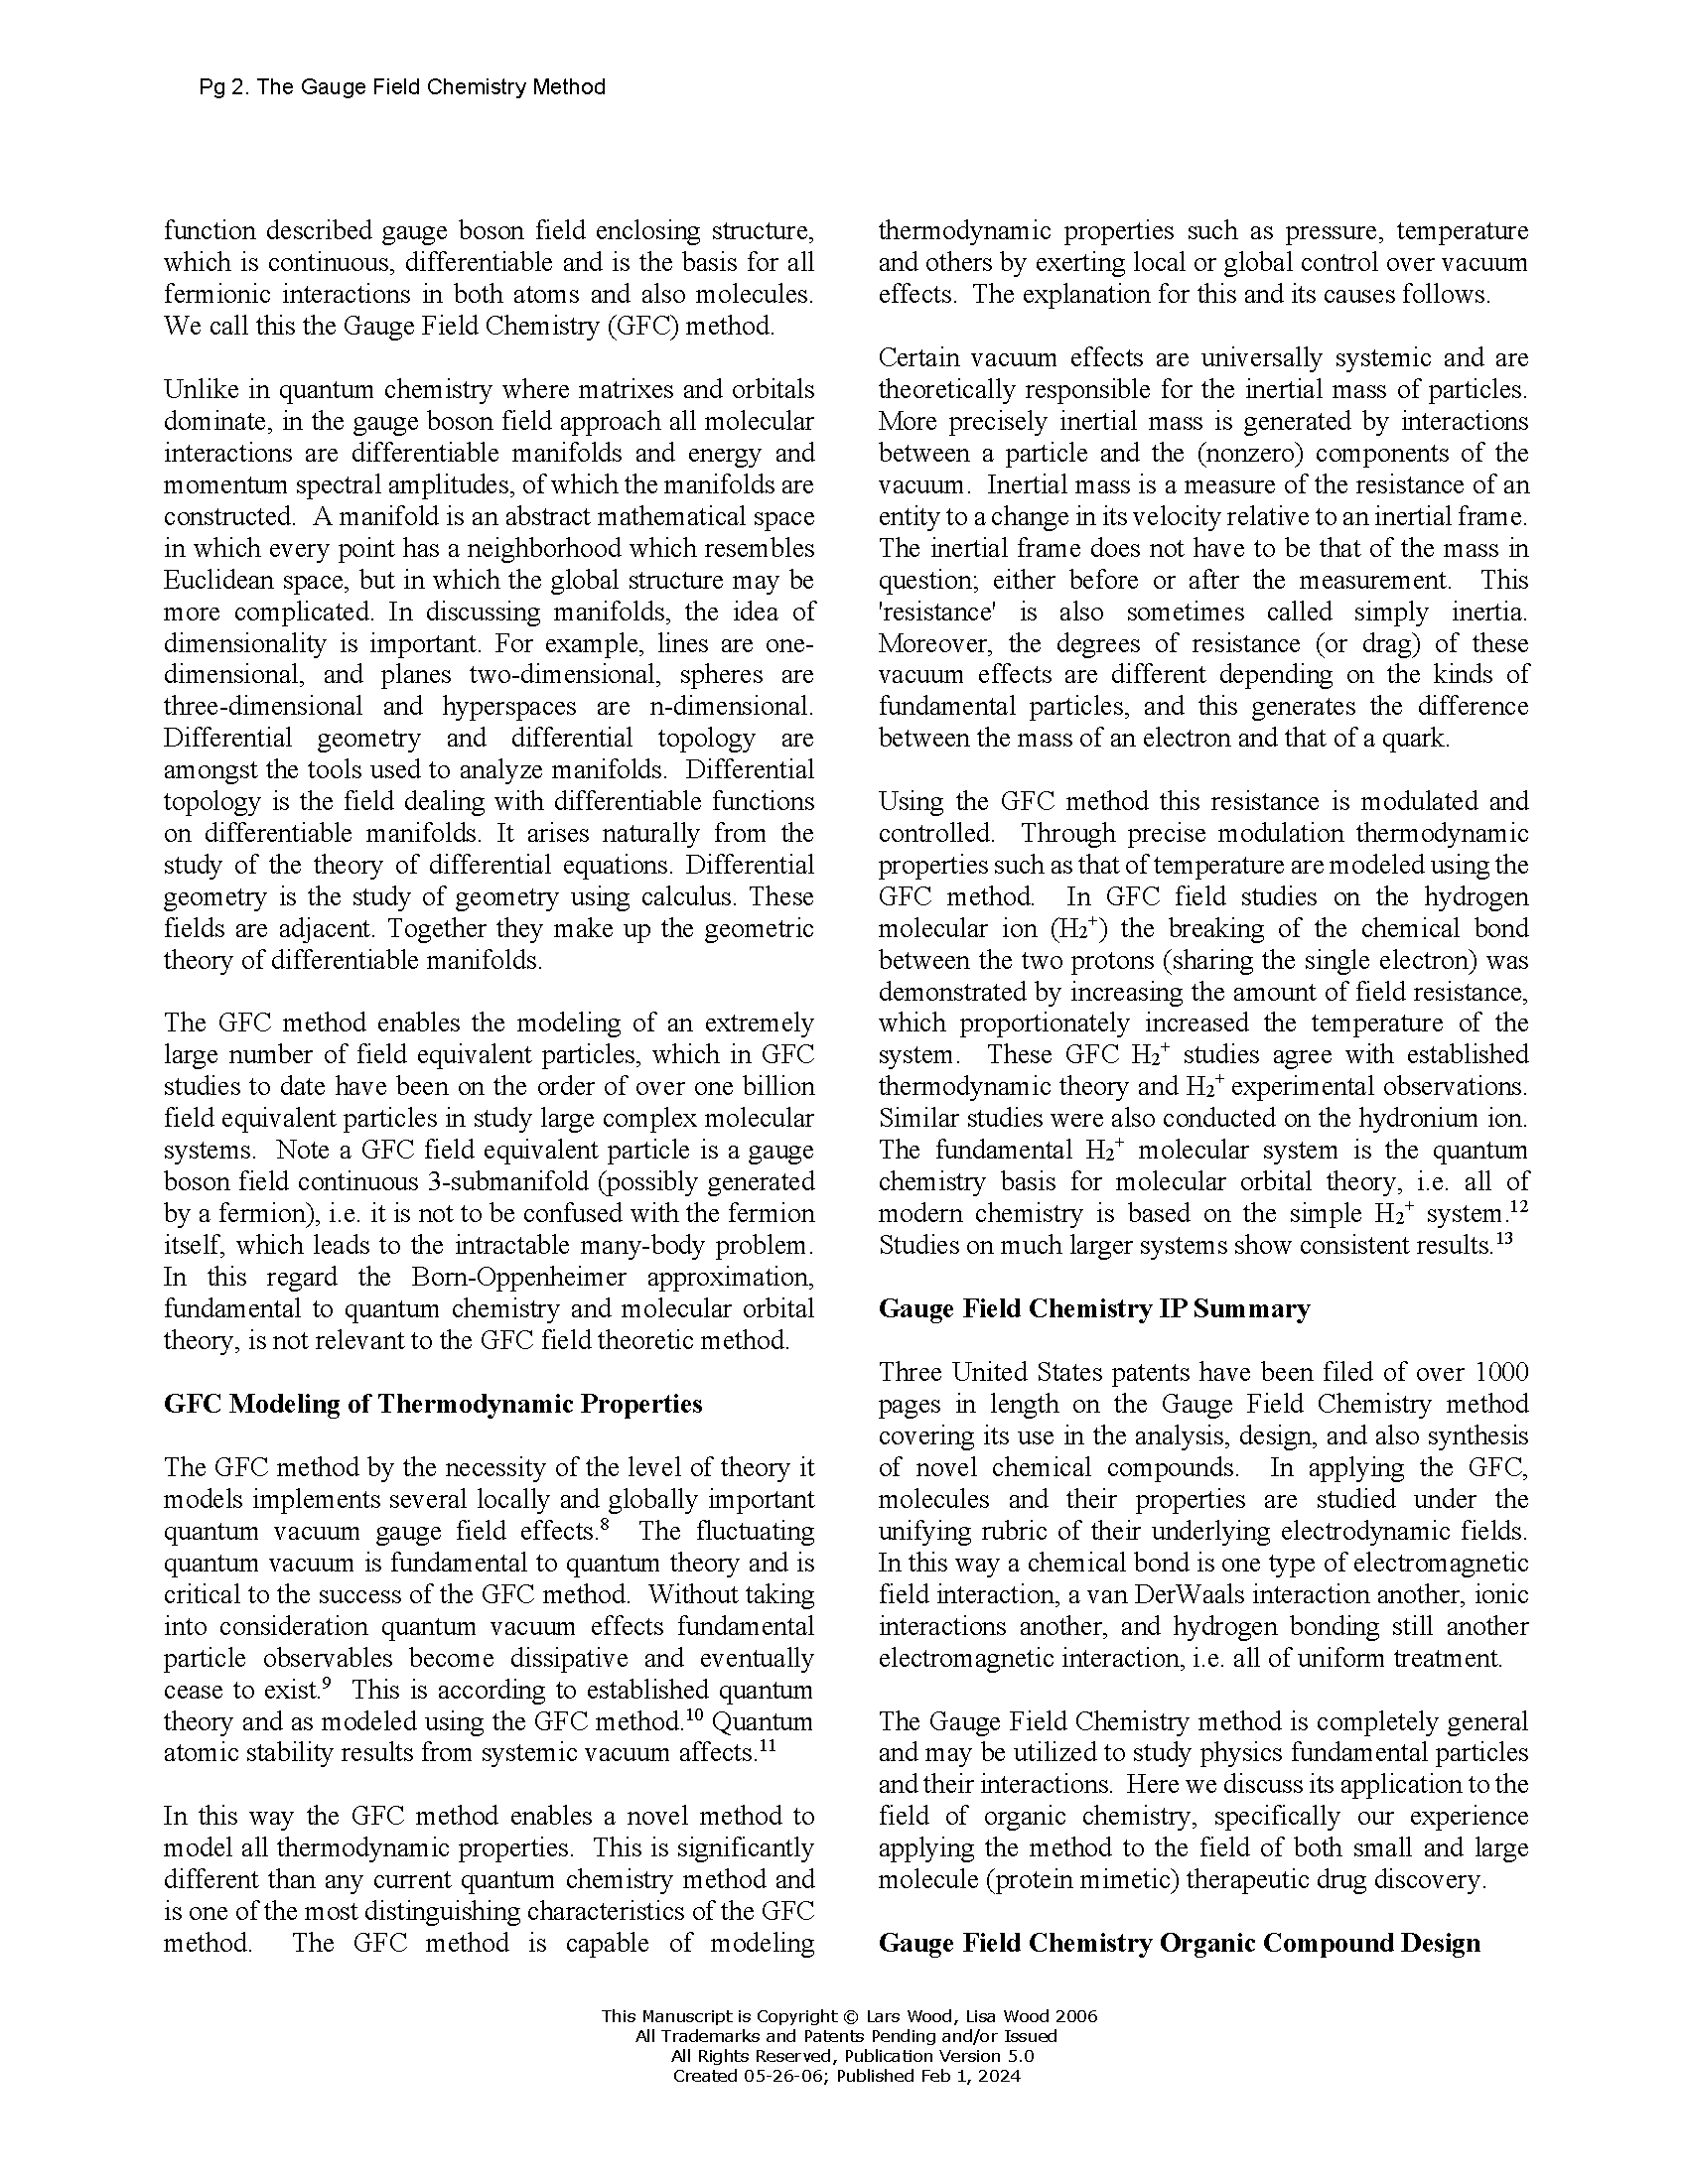 The Gauge Field Chemistry Method V5 Published_Page_02.png